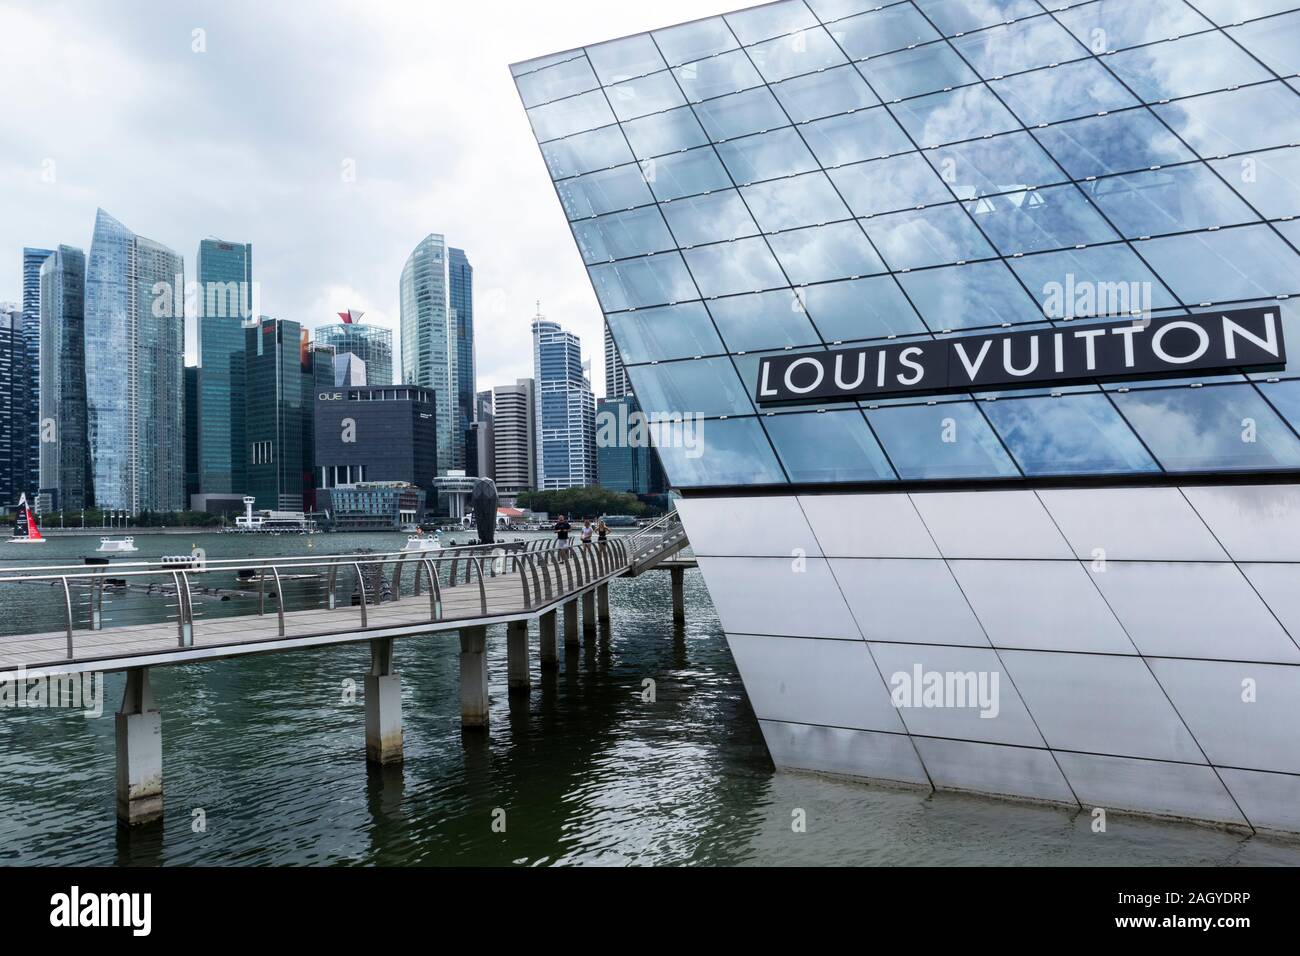 KUALA LUMPUR, MALAYSIA, May 20, 2016: a Louis Vuitton LV Outlet